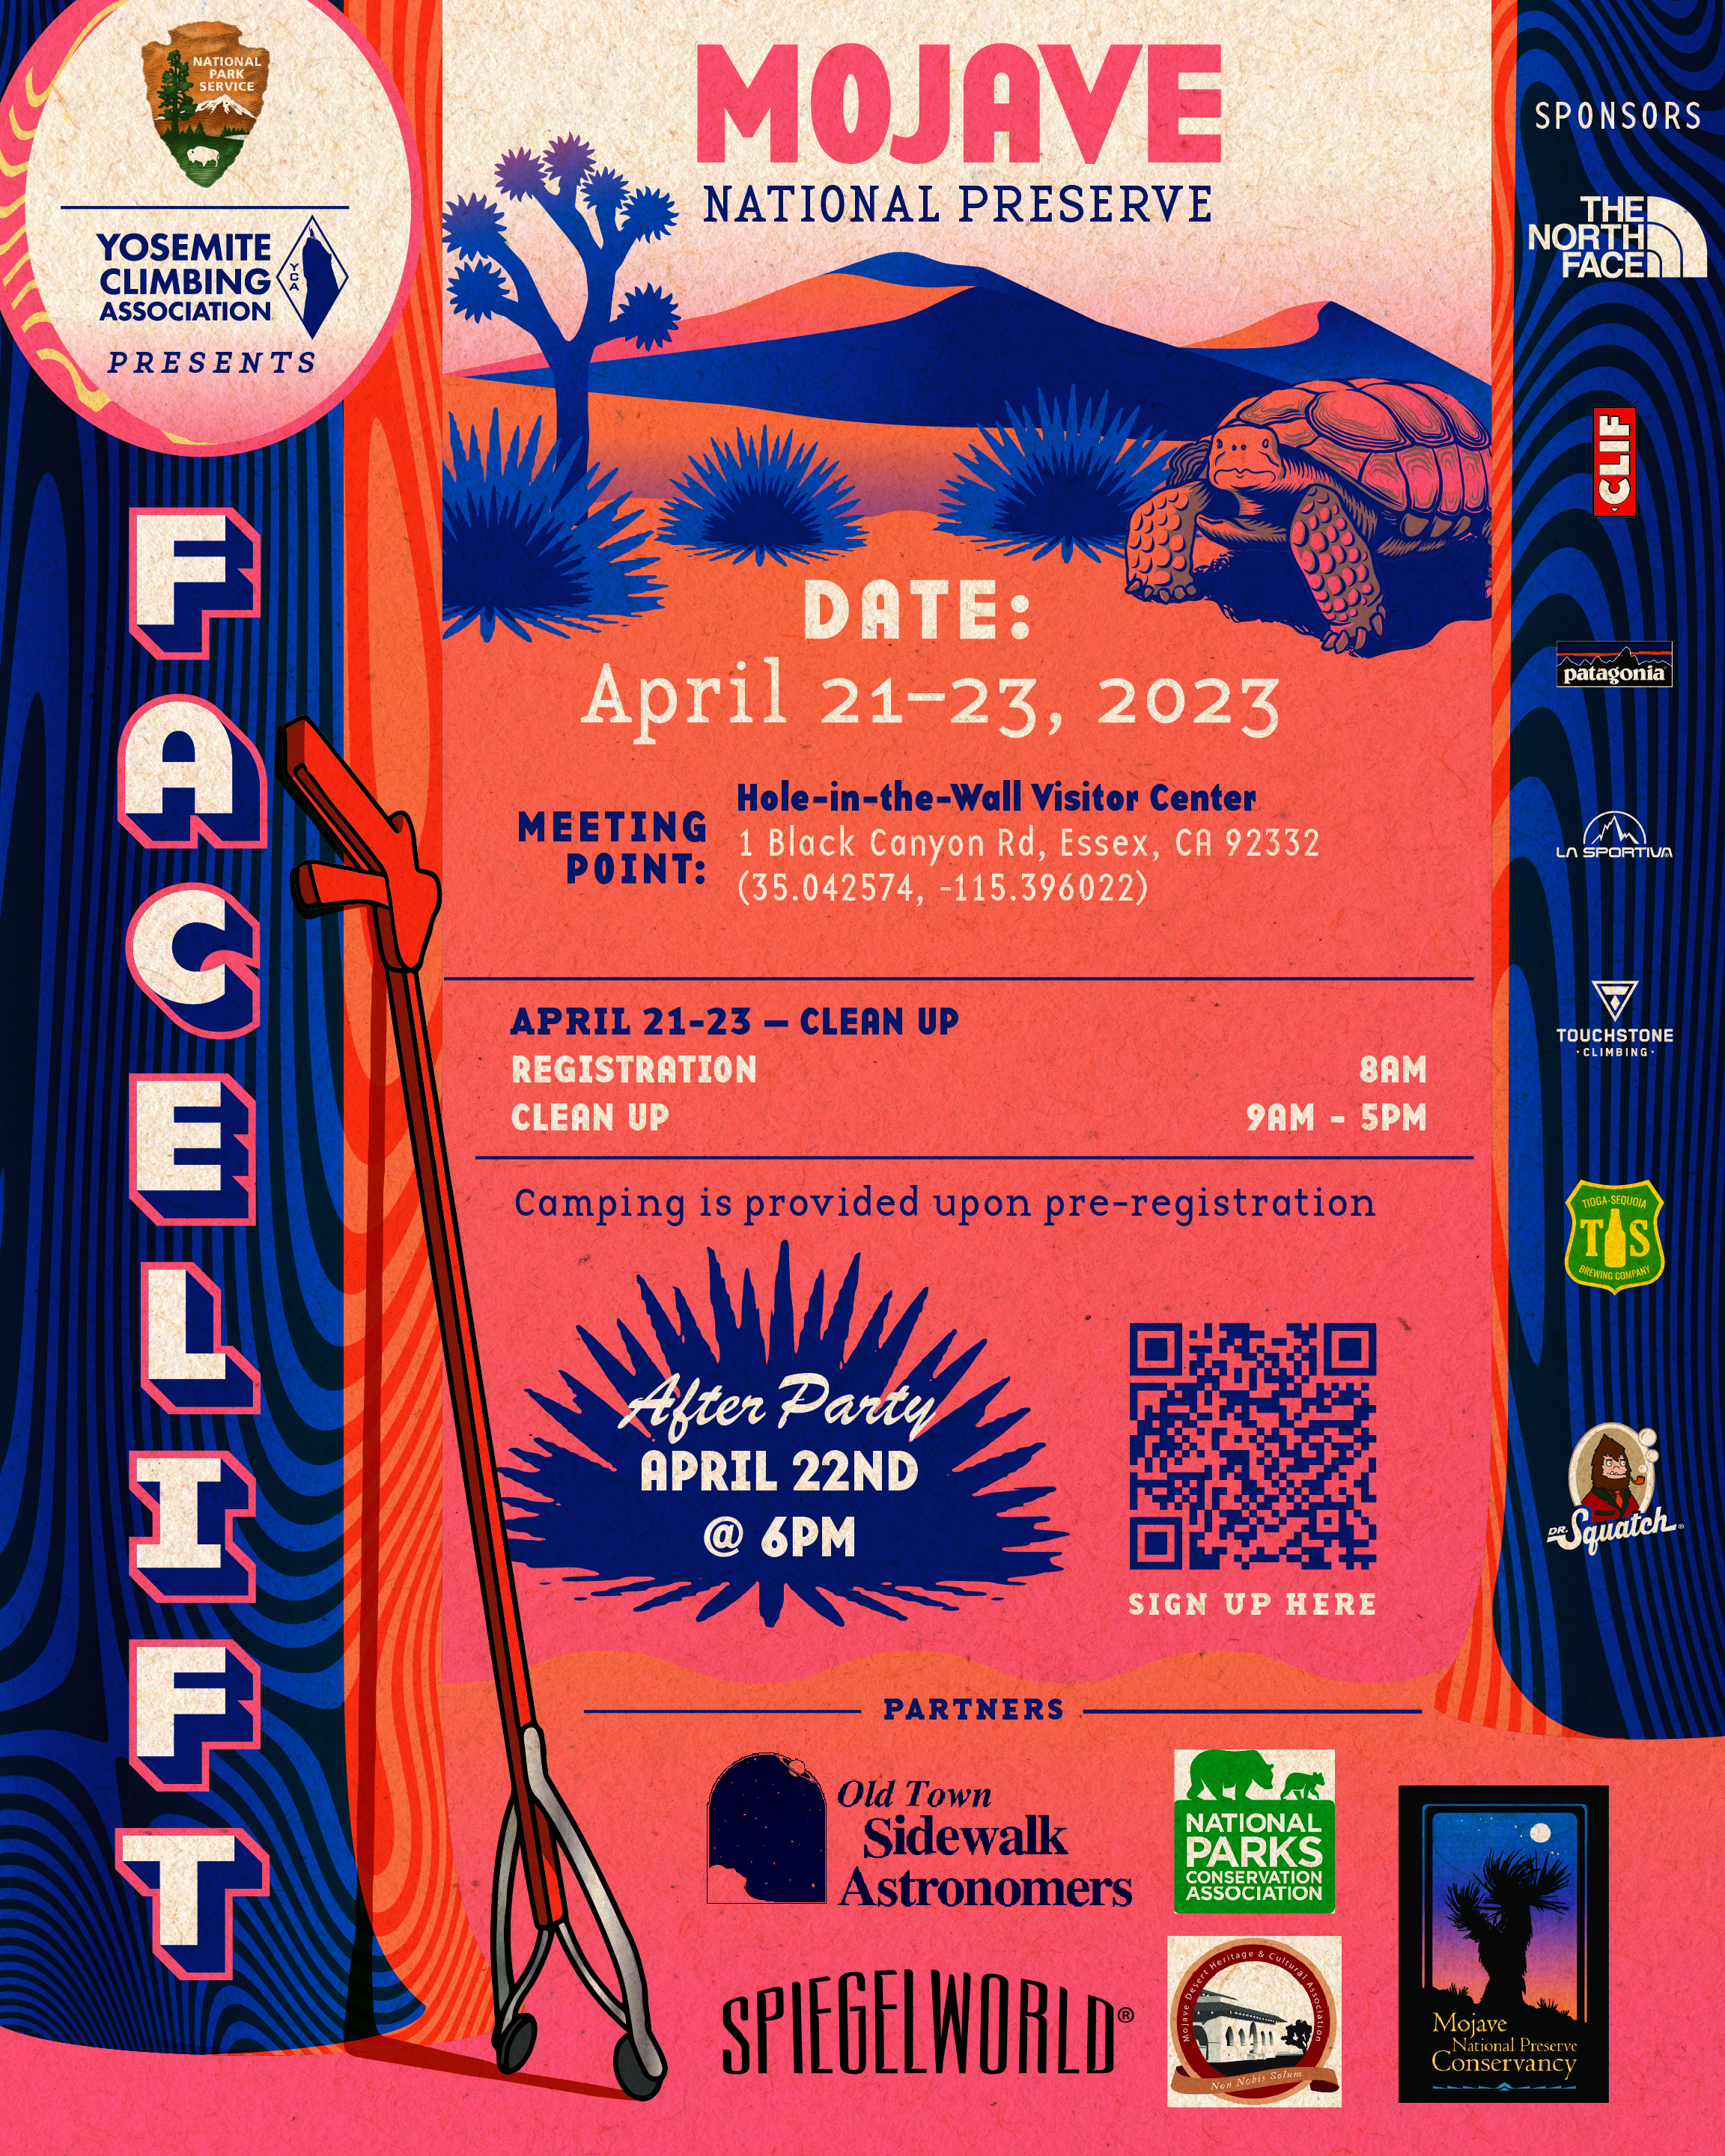 Promotional Poster for Facelift event April 21-23 at Mojave National Preserve